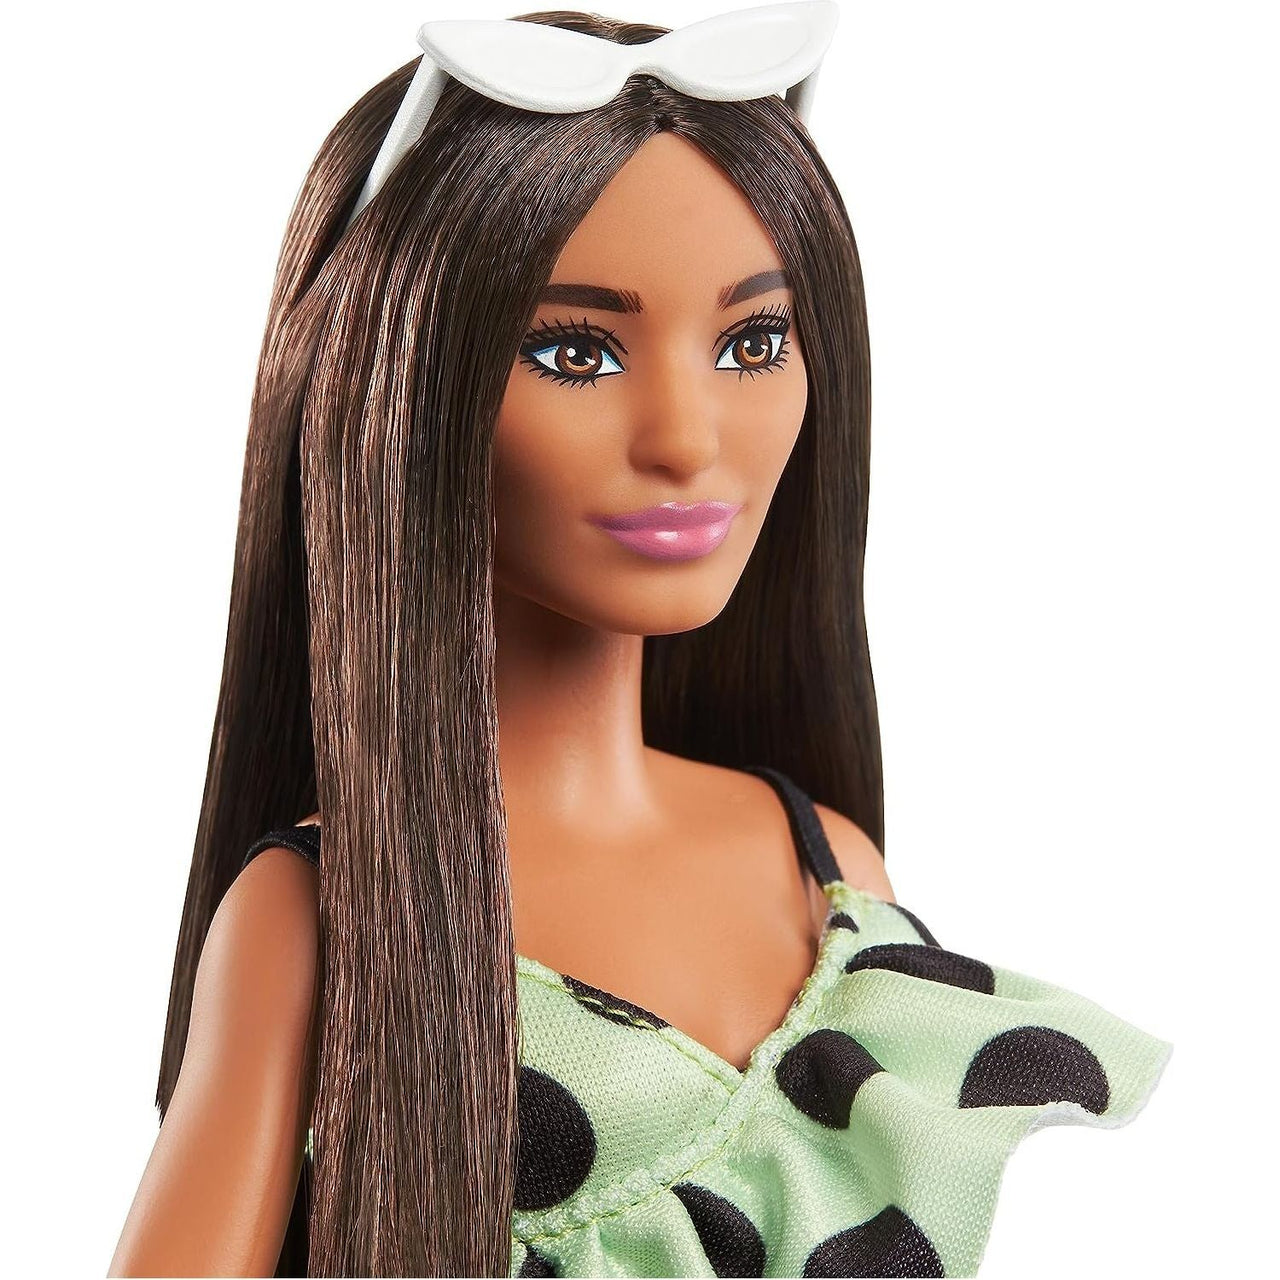 Barbie Fashionista Doll 200 - Brunette with Polka Dot Romper Barbie